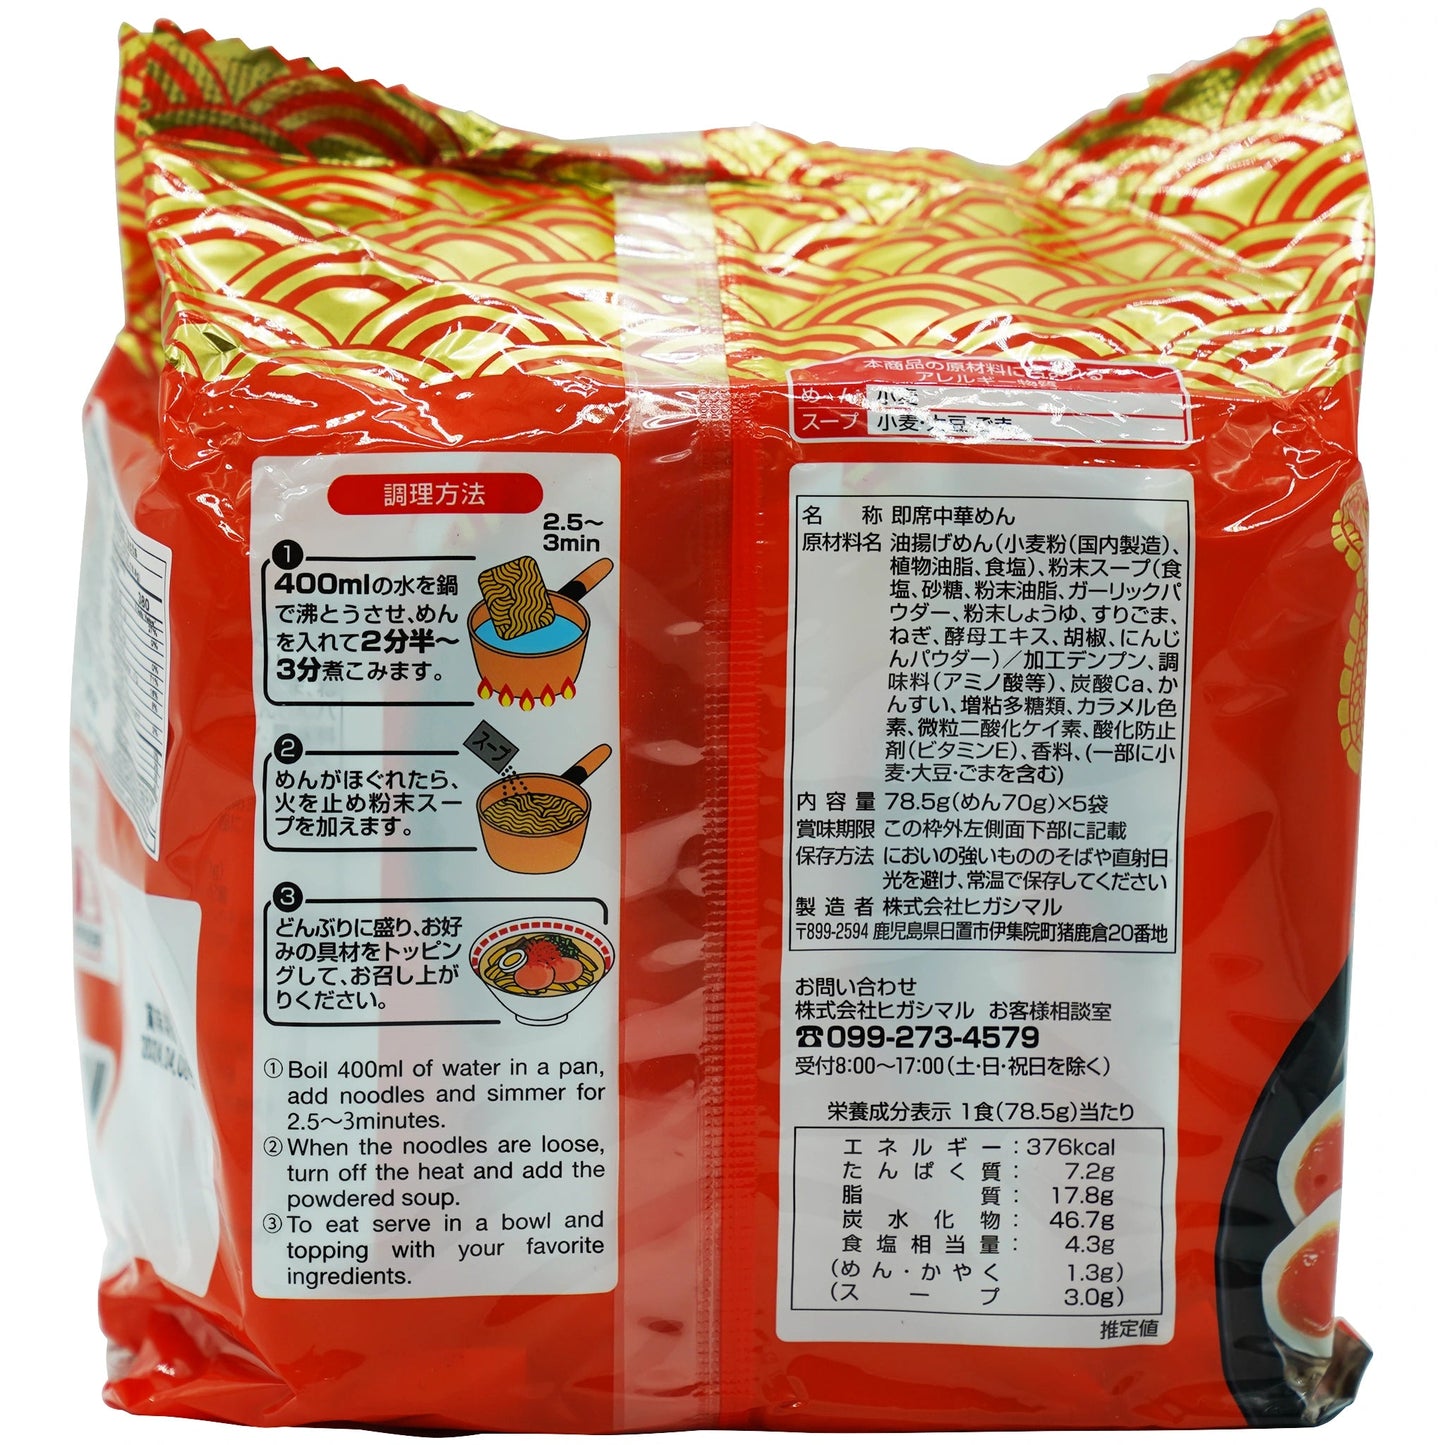 Tonkotsufu Kagoshima Ramen Soup 5 Piece 13.84 oz - Tokyo Central - Noodles - Higashi Foods -